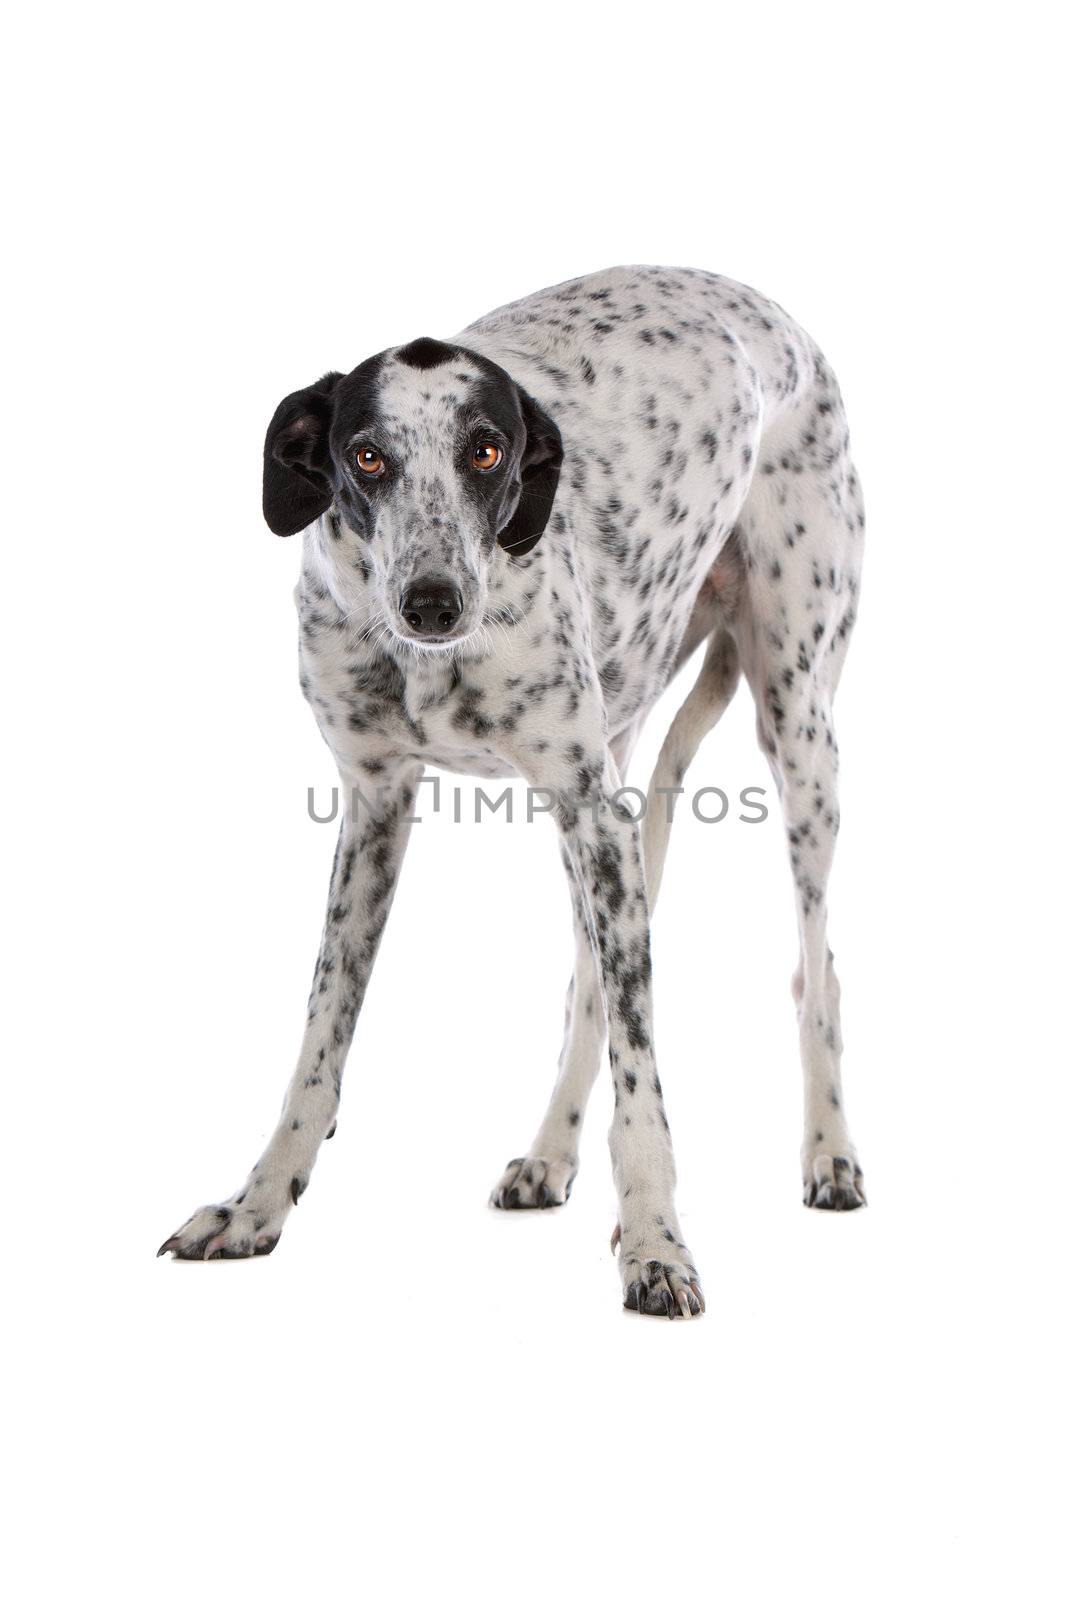 white Greyhound dog with black spots by eriklam